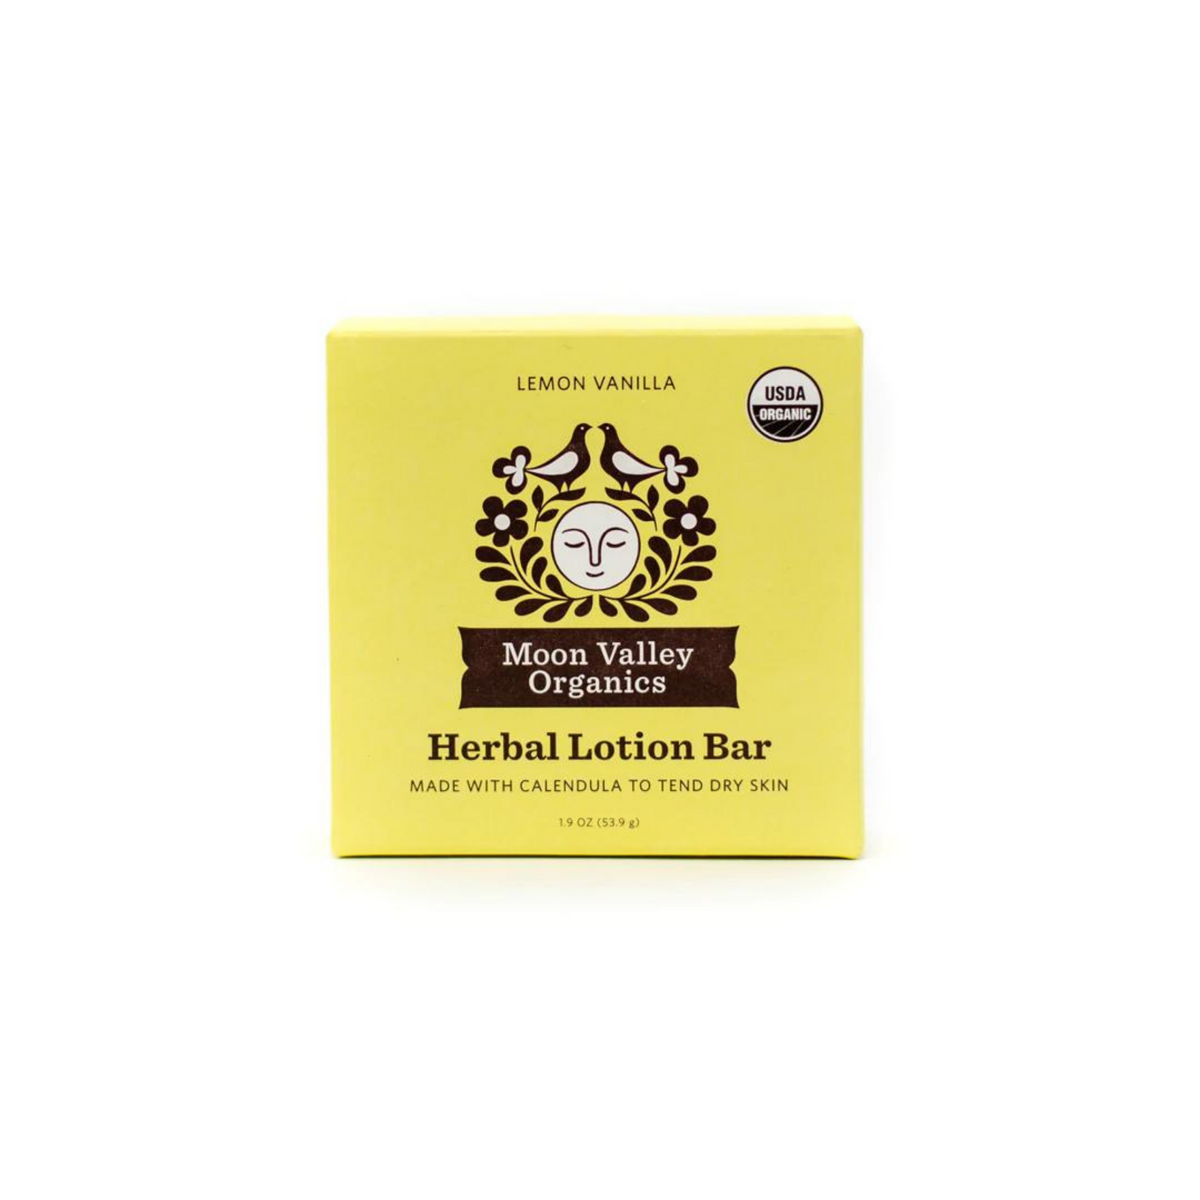 Primary Image of Lemon Vanilla Herbal Lotion Bar